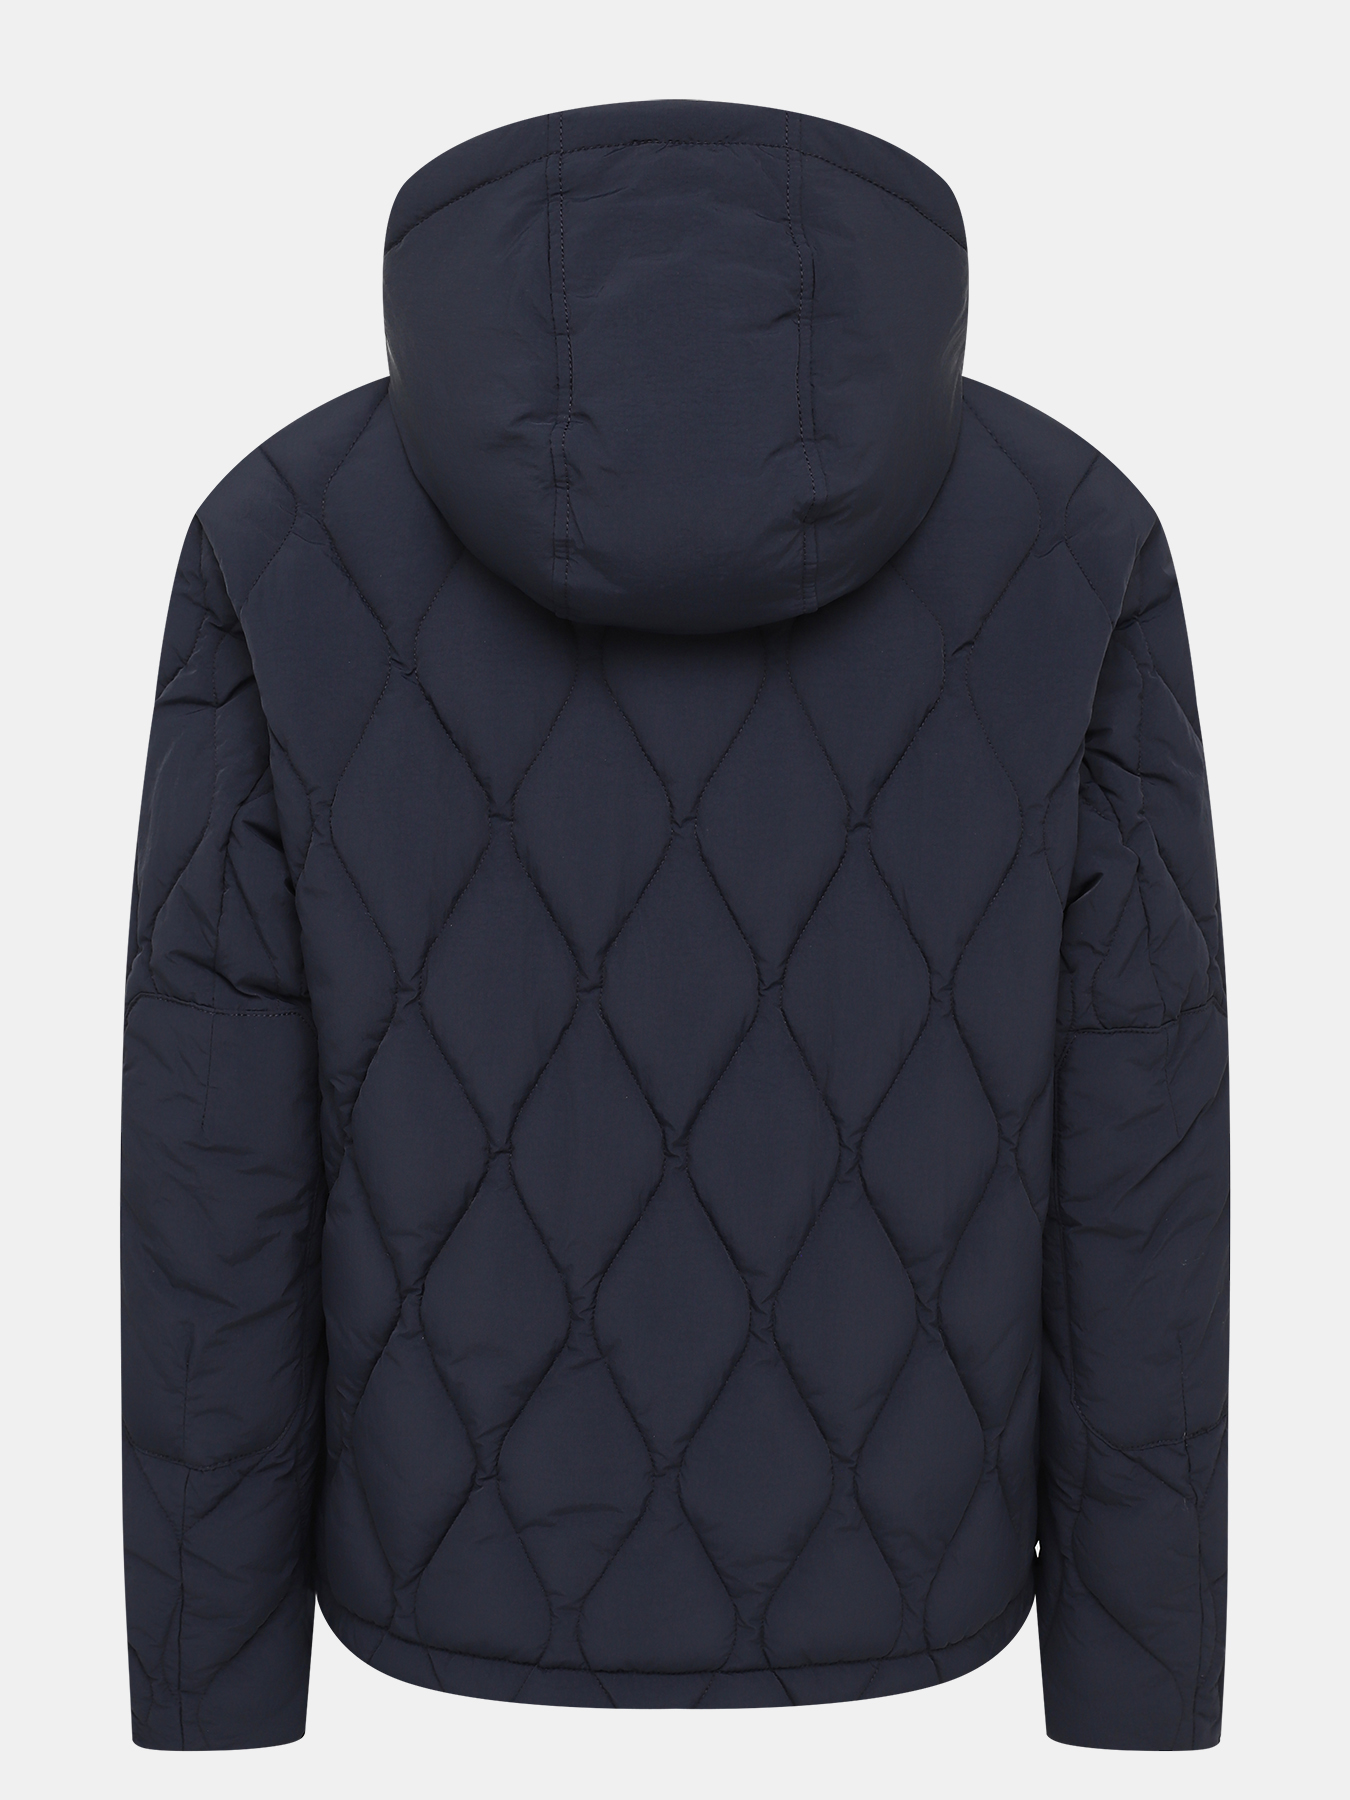 Куртка Onlet BOSS 424685-027, цвет темно-синий, размер 52 - фото 2